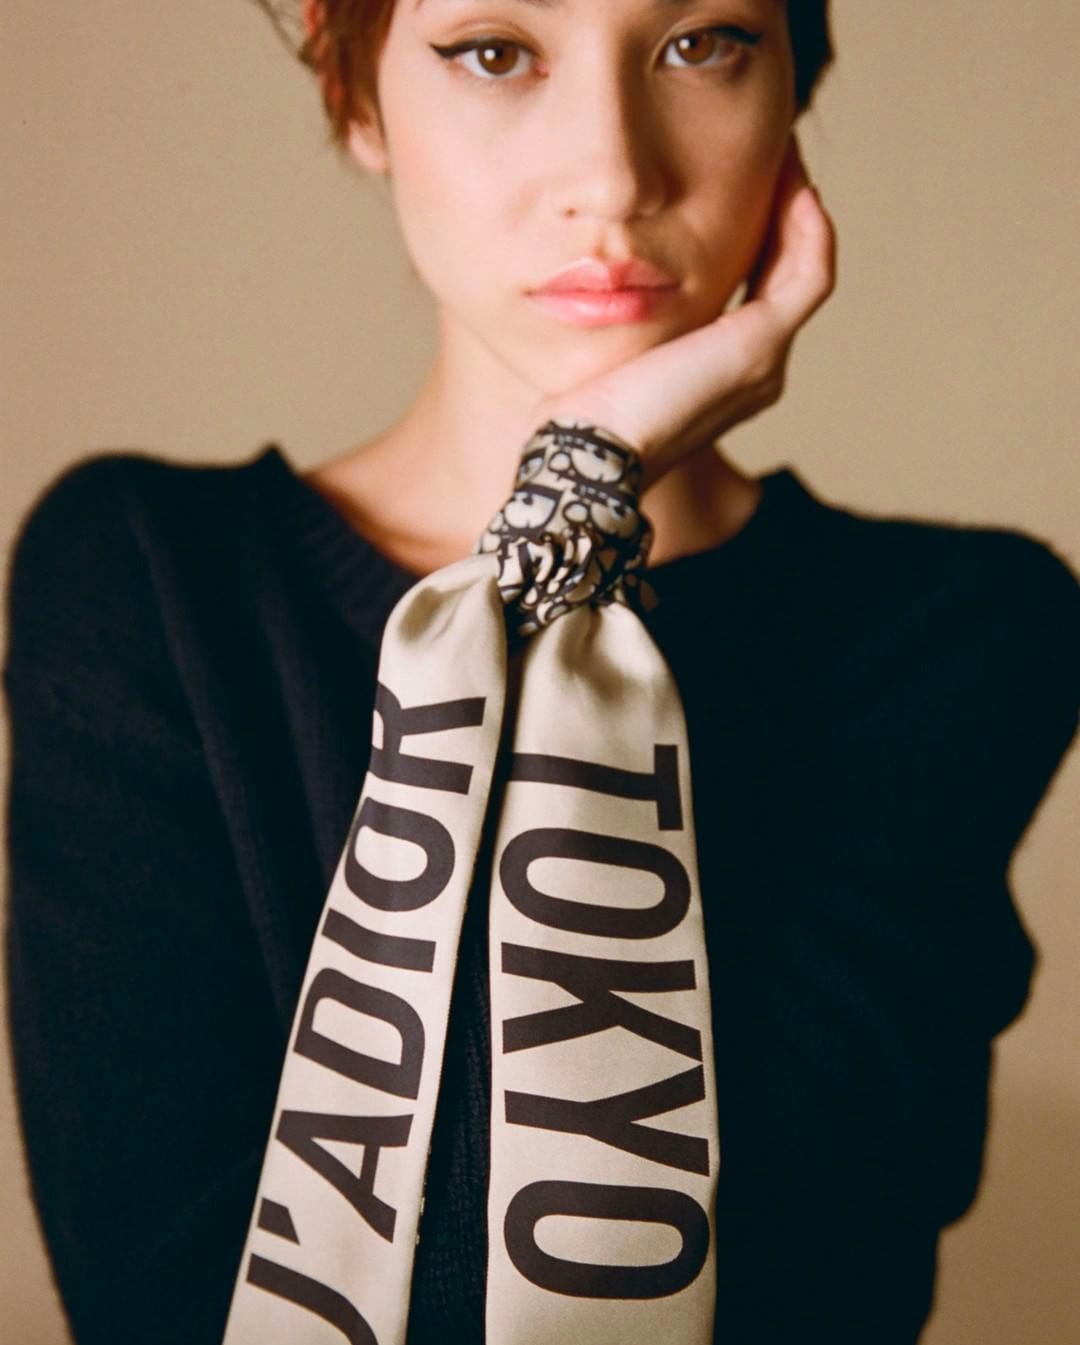 Kiko Mizuhara Christian Dior Tokyo Exclusive Campaign J'adior